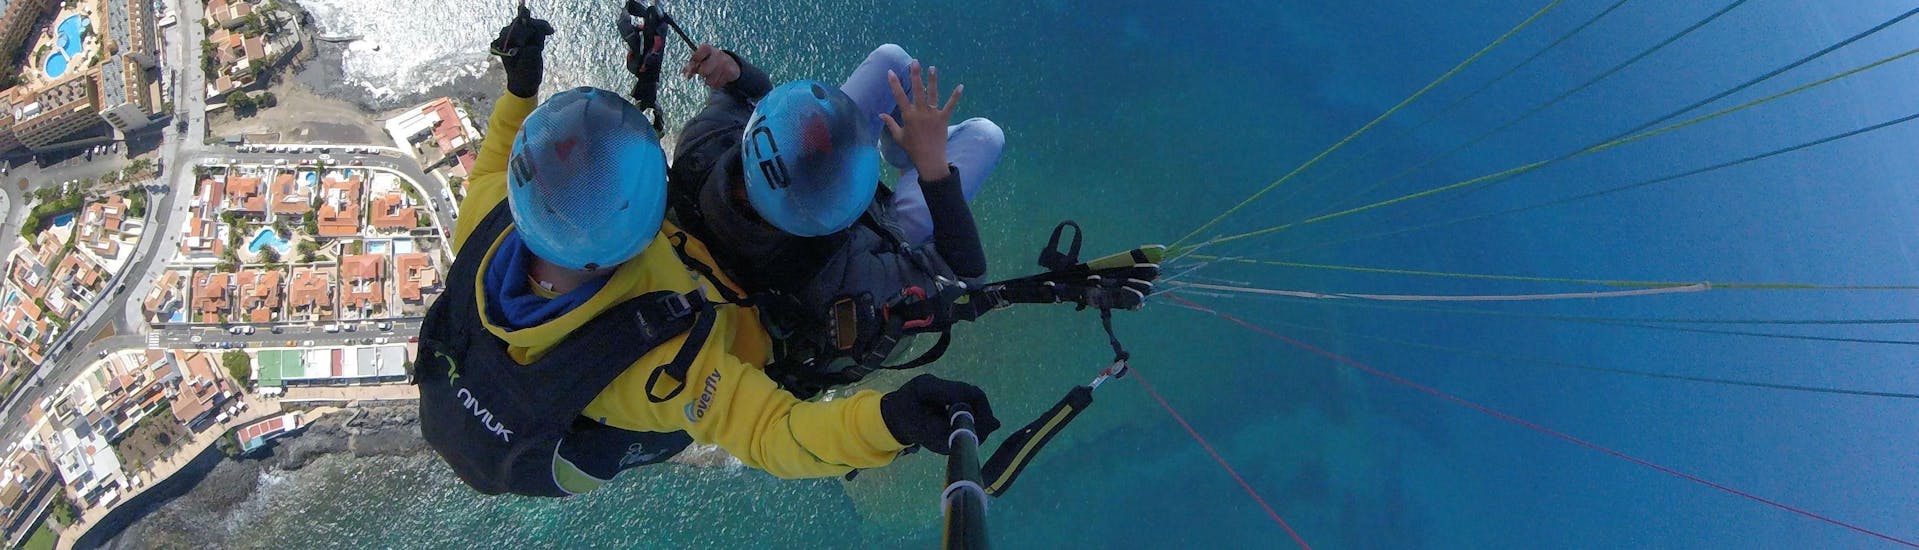 Tandem Paragliding in Tenerife - Acrobatic.